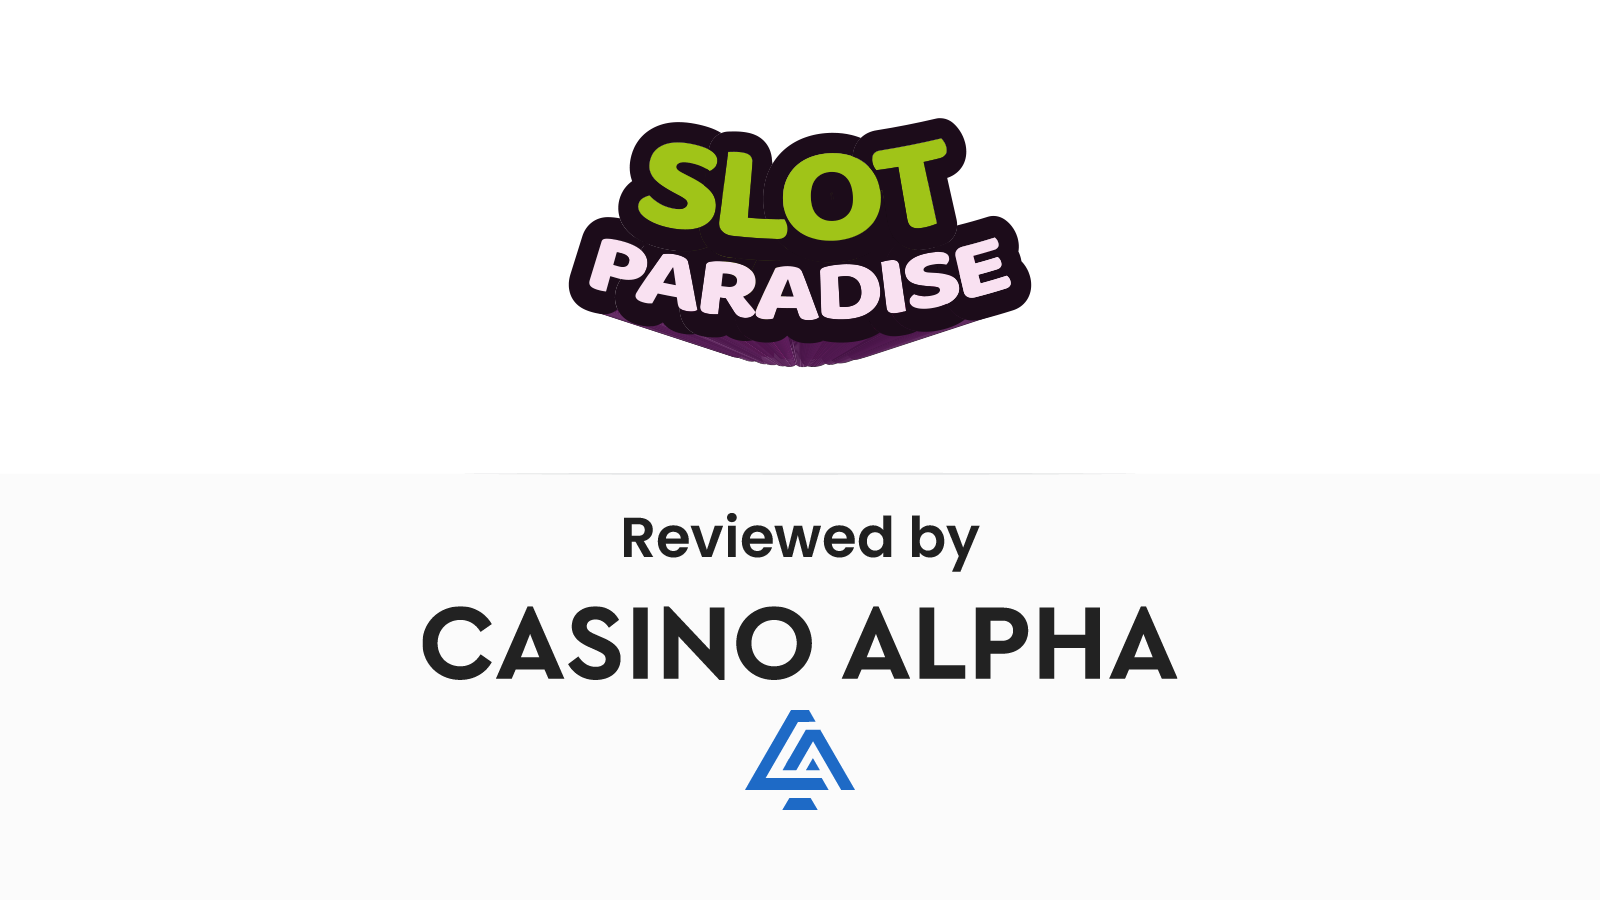 Slot Paradise Casino Review & Bonus codes